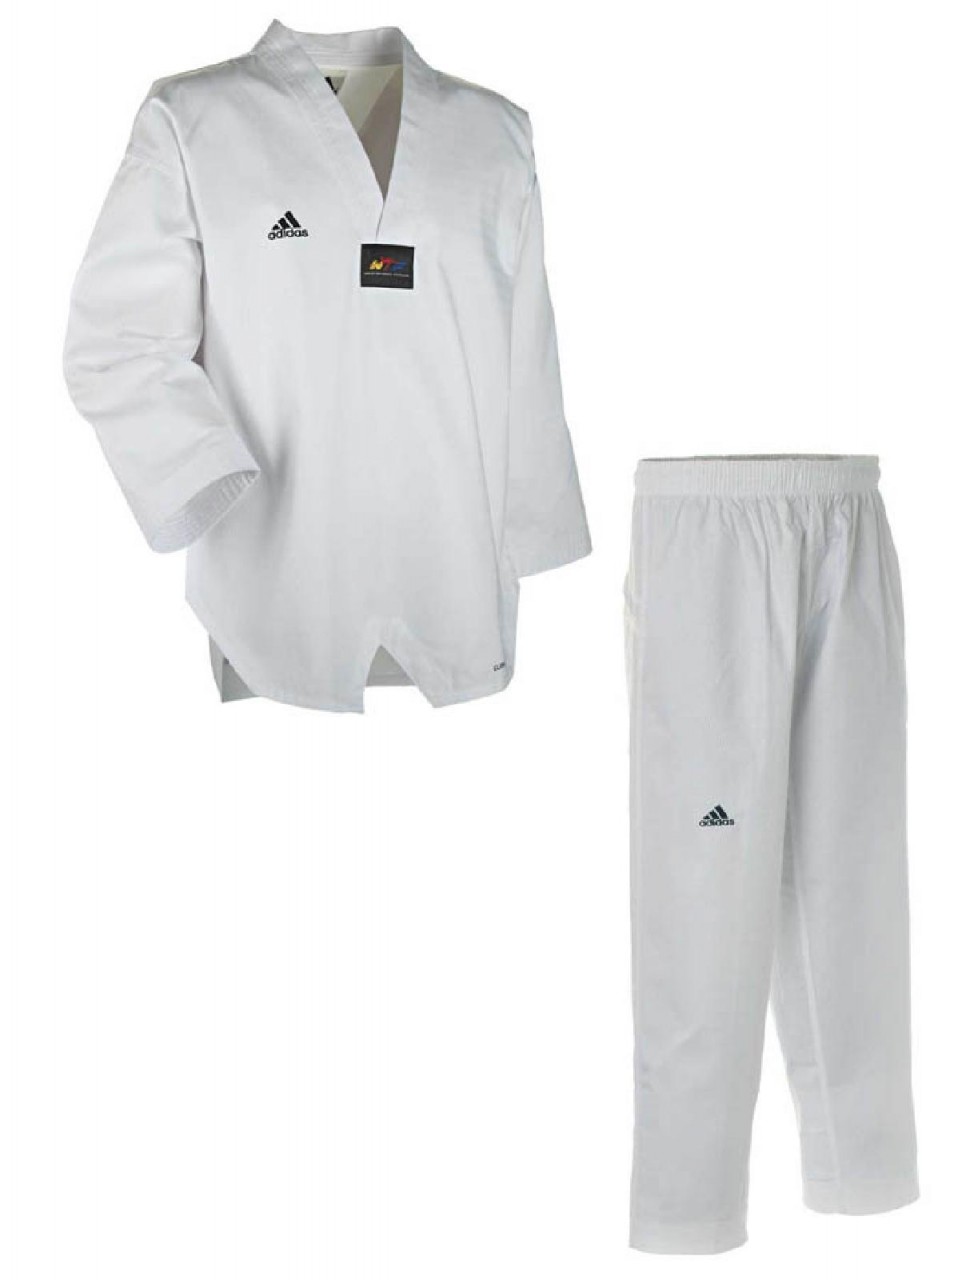 Adidas Taekwondoanzug, Adichamp III,weißes Revers von Ju-Sports